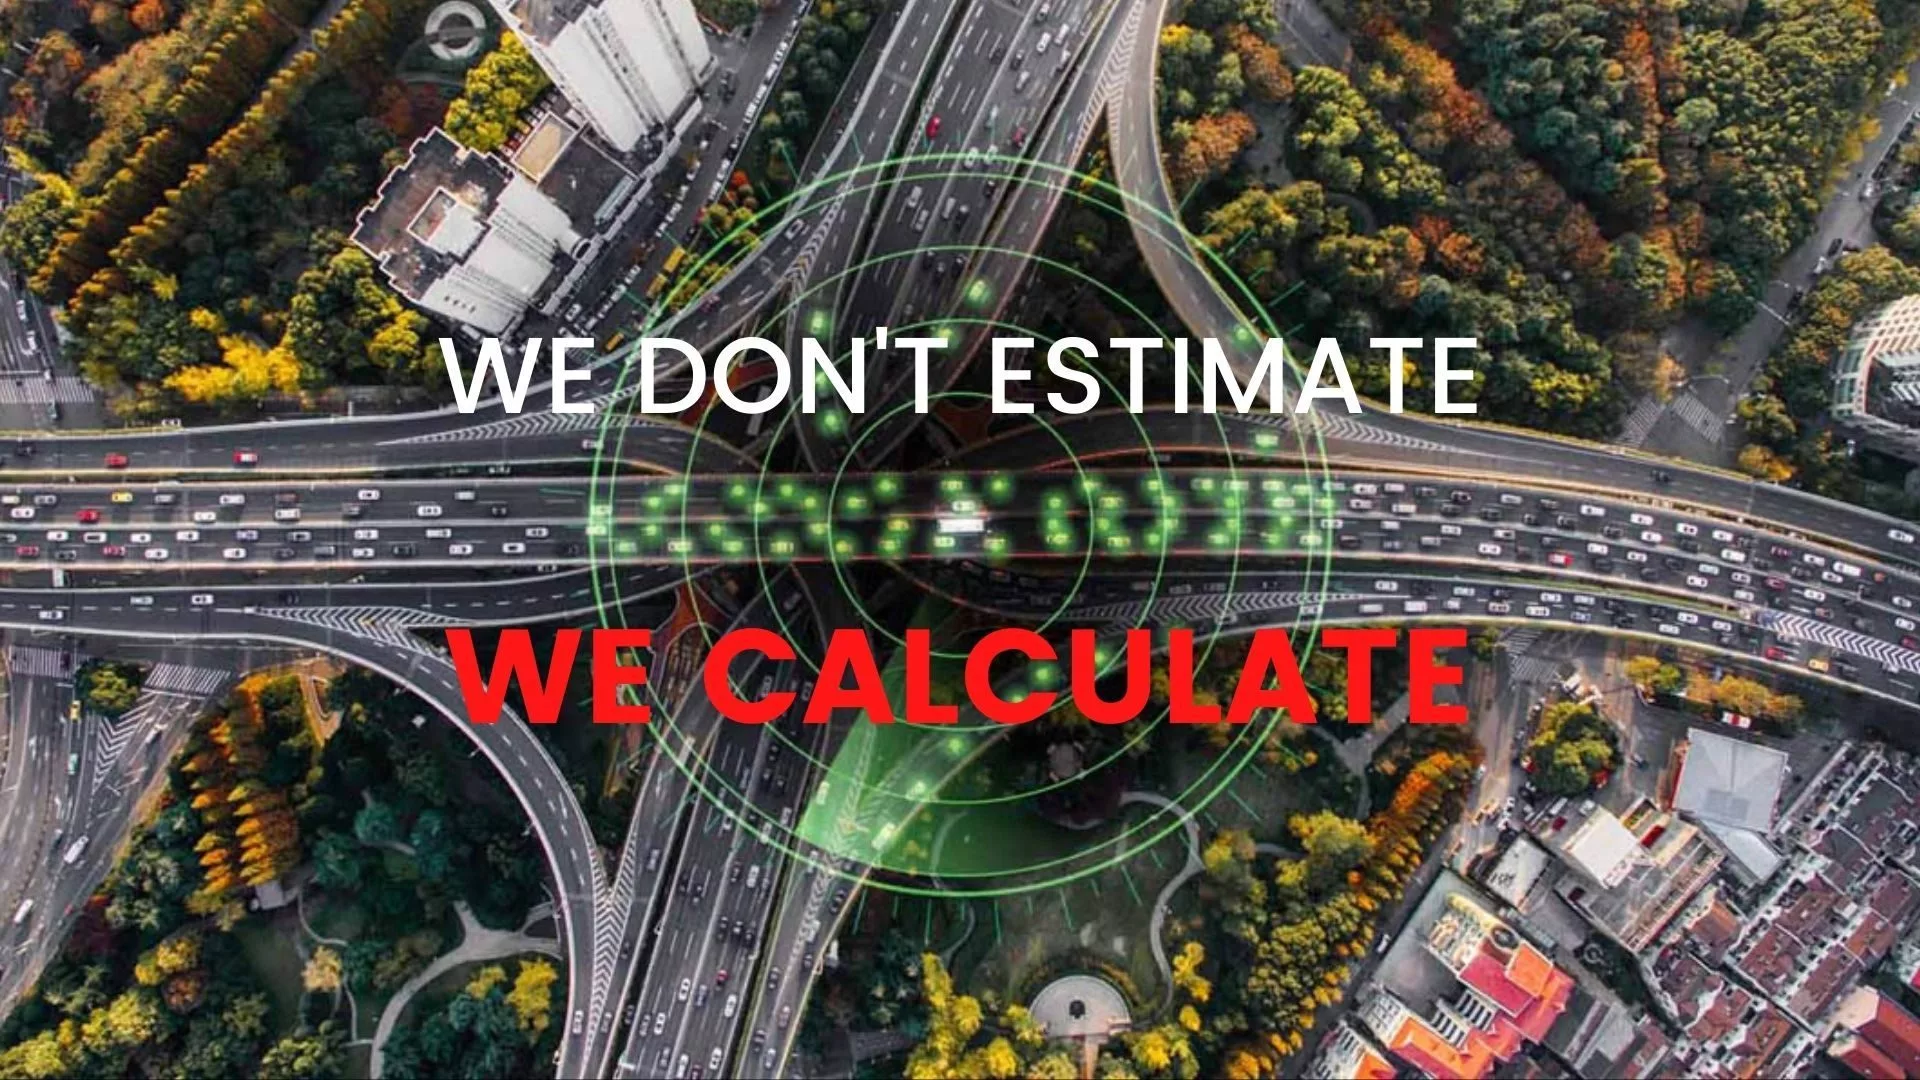 We don't estimate, we calculate